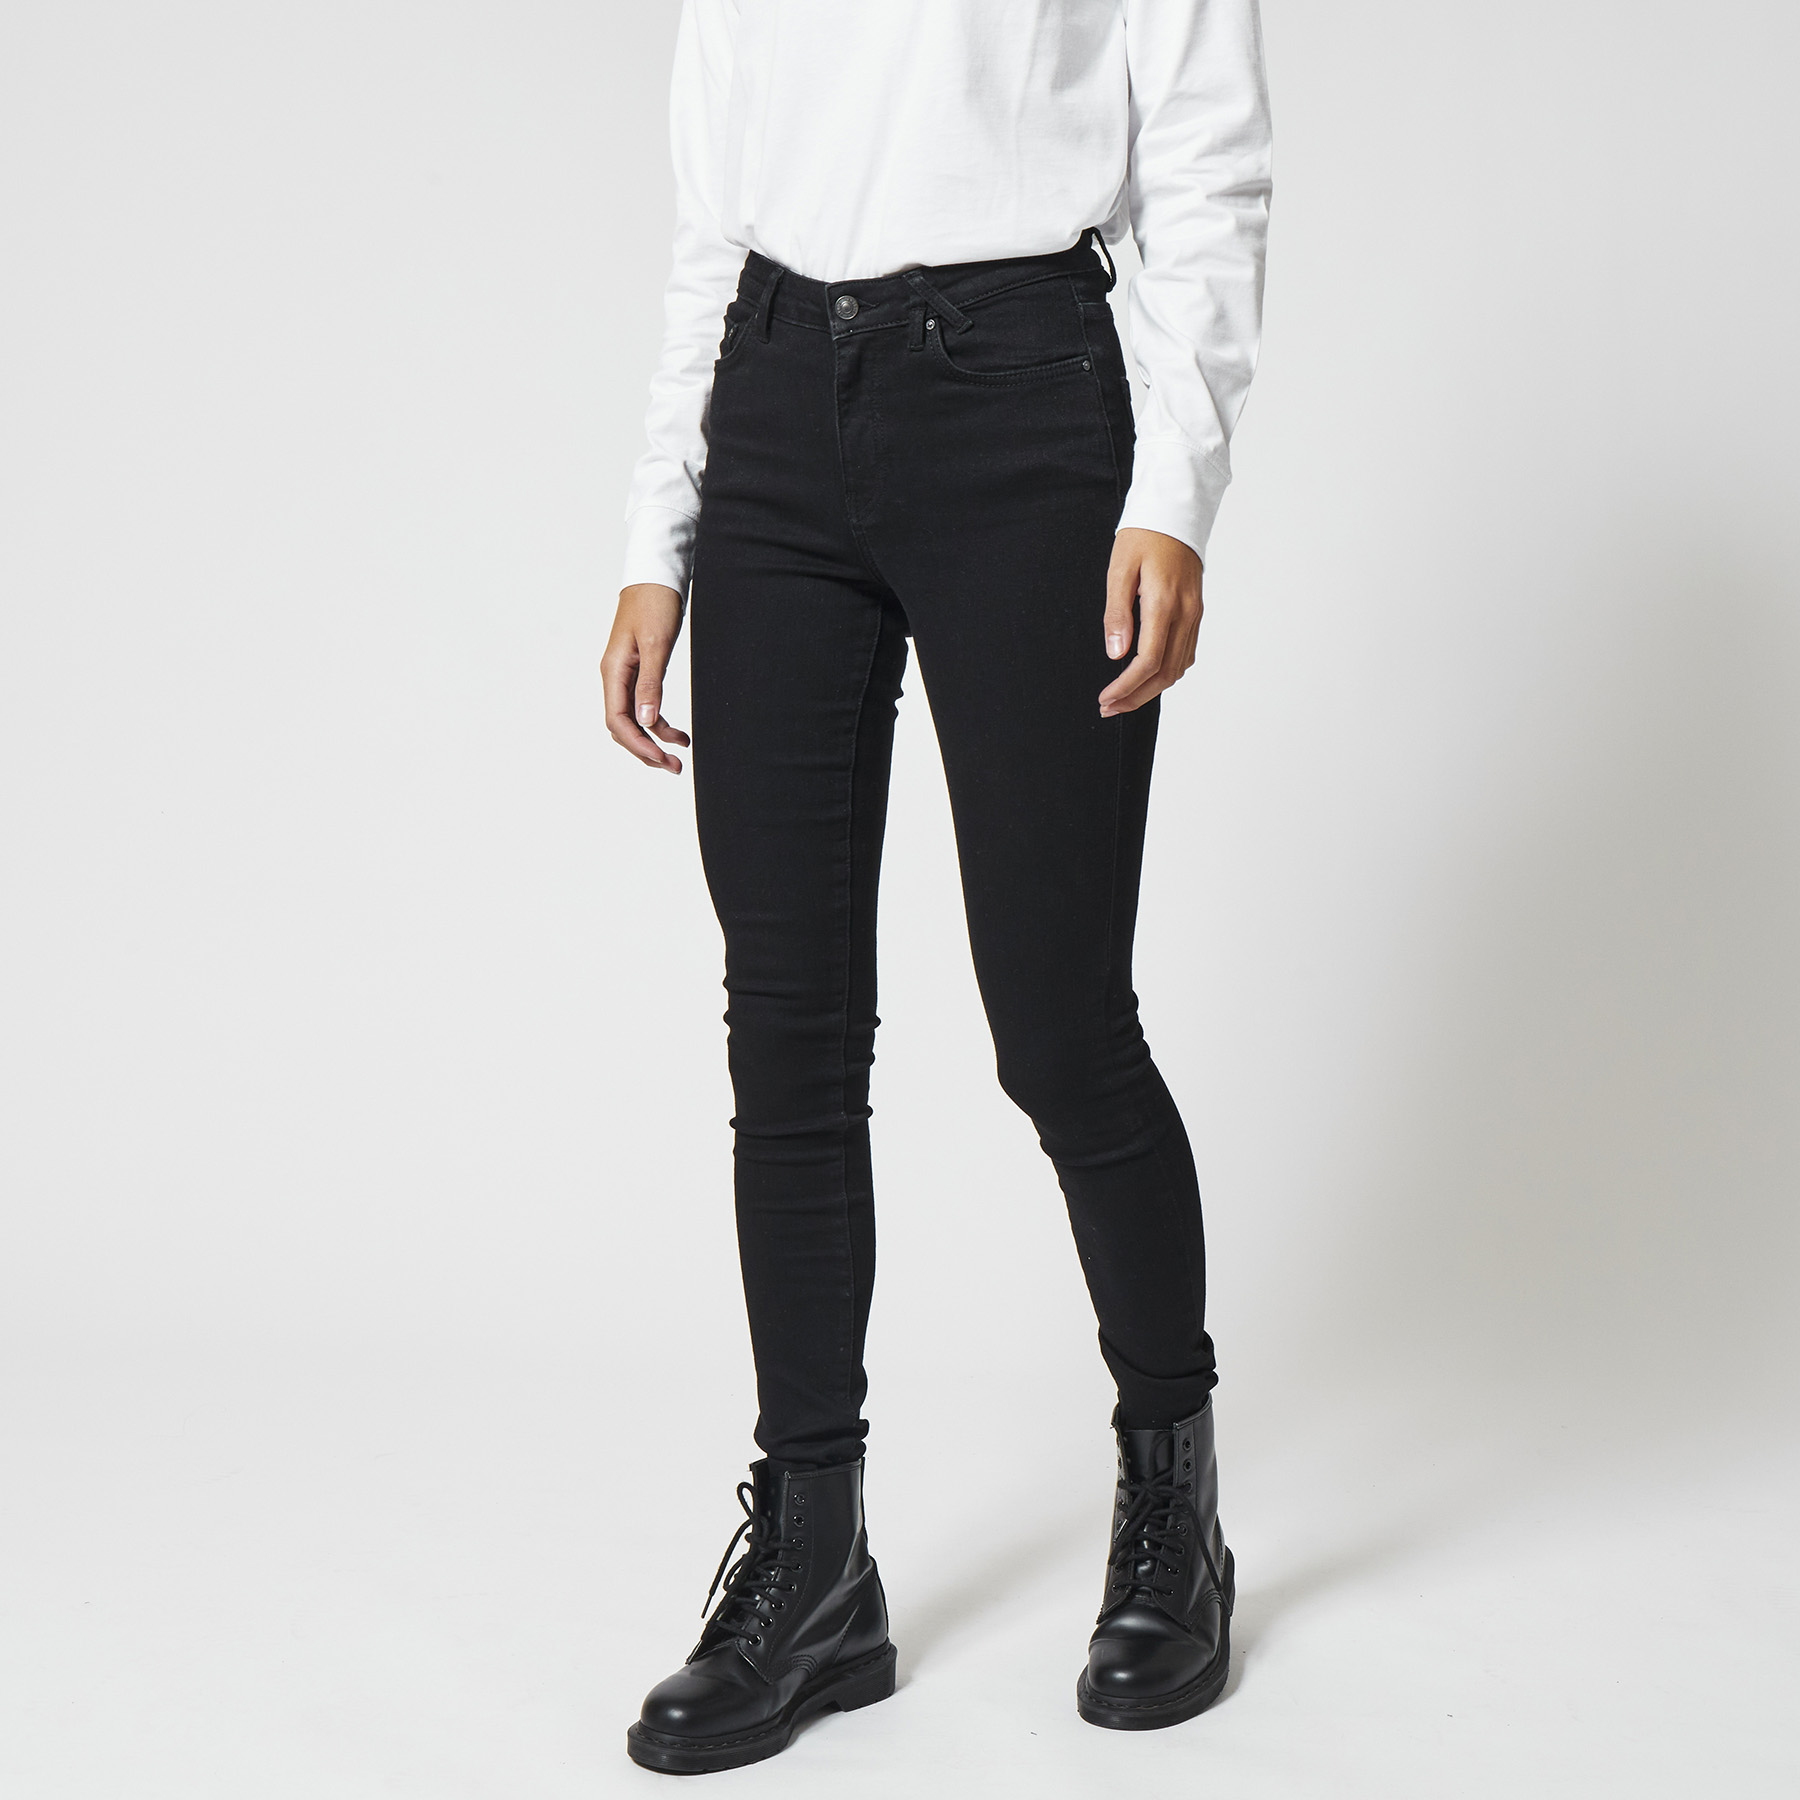 Zwarte Skinny Jeans Dames Flash Sales, SAVE 40% - horiconphoenix.com